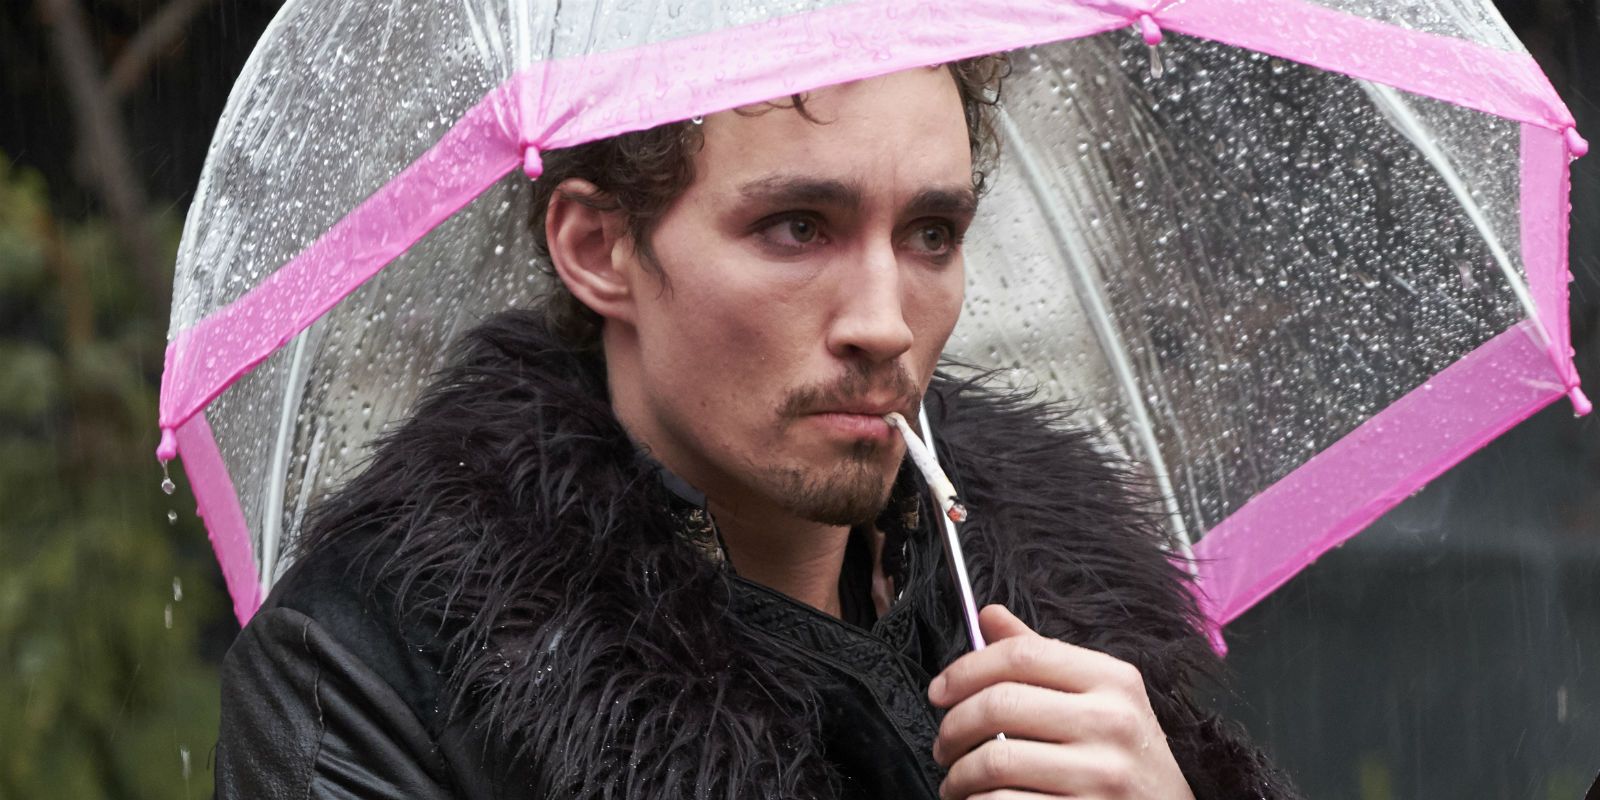 Klaus standing under the rain in The Umbrella Academy